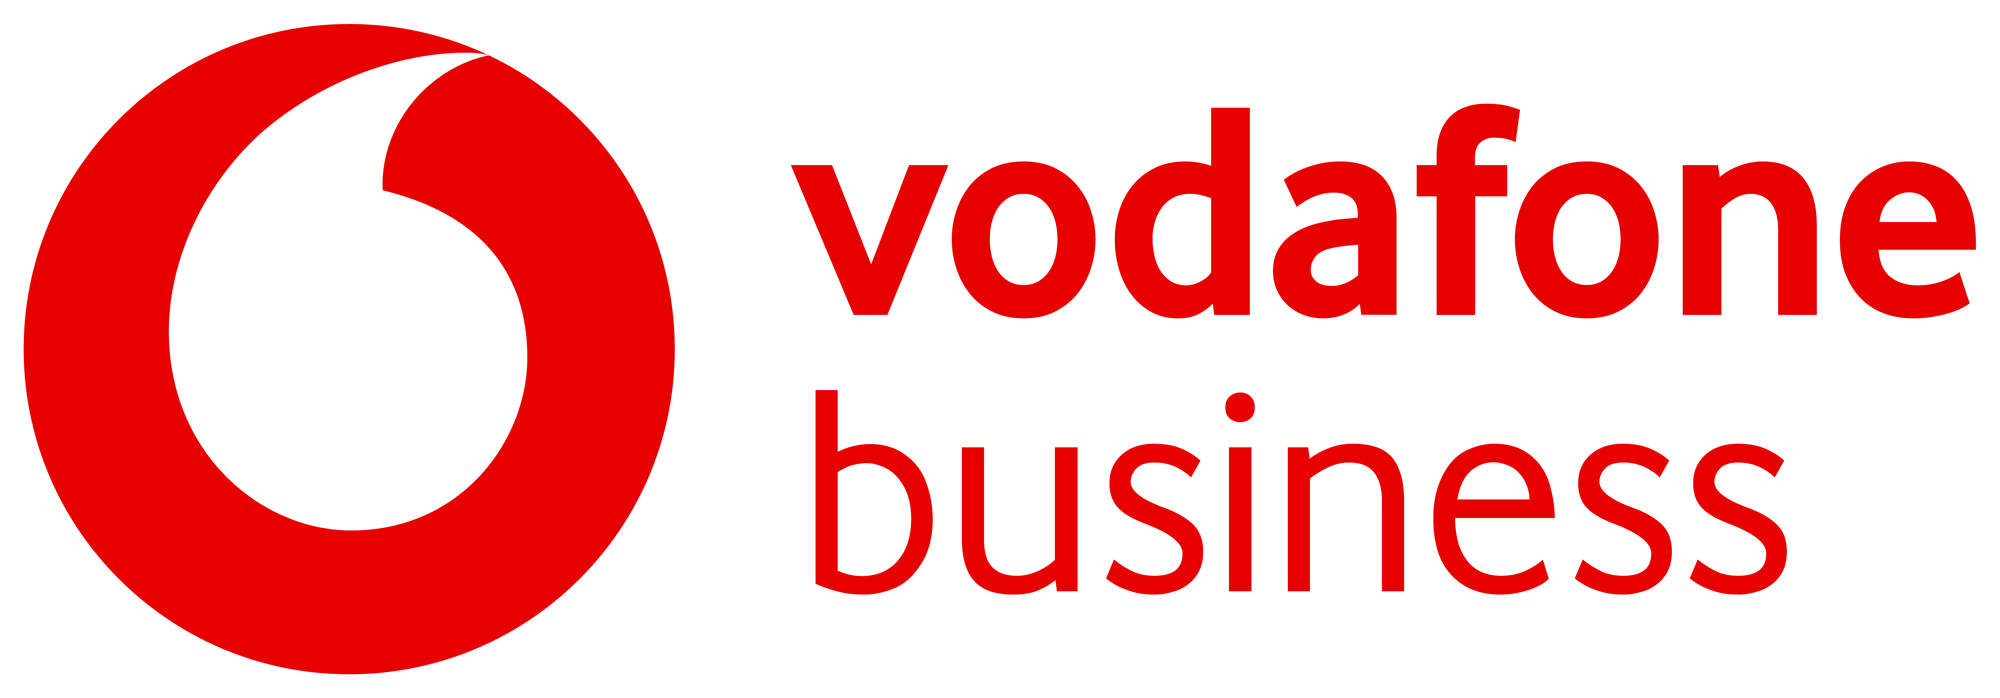 VF_Business_Logo_RGB_RED